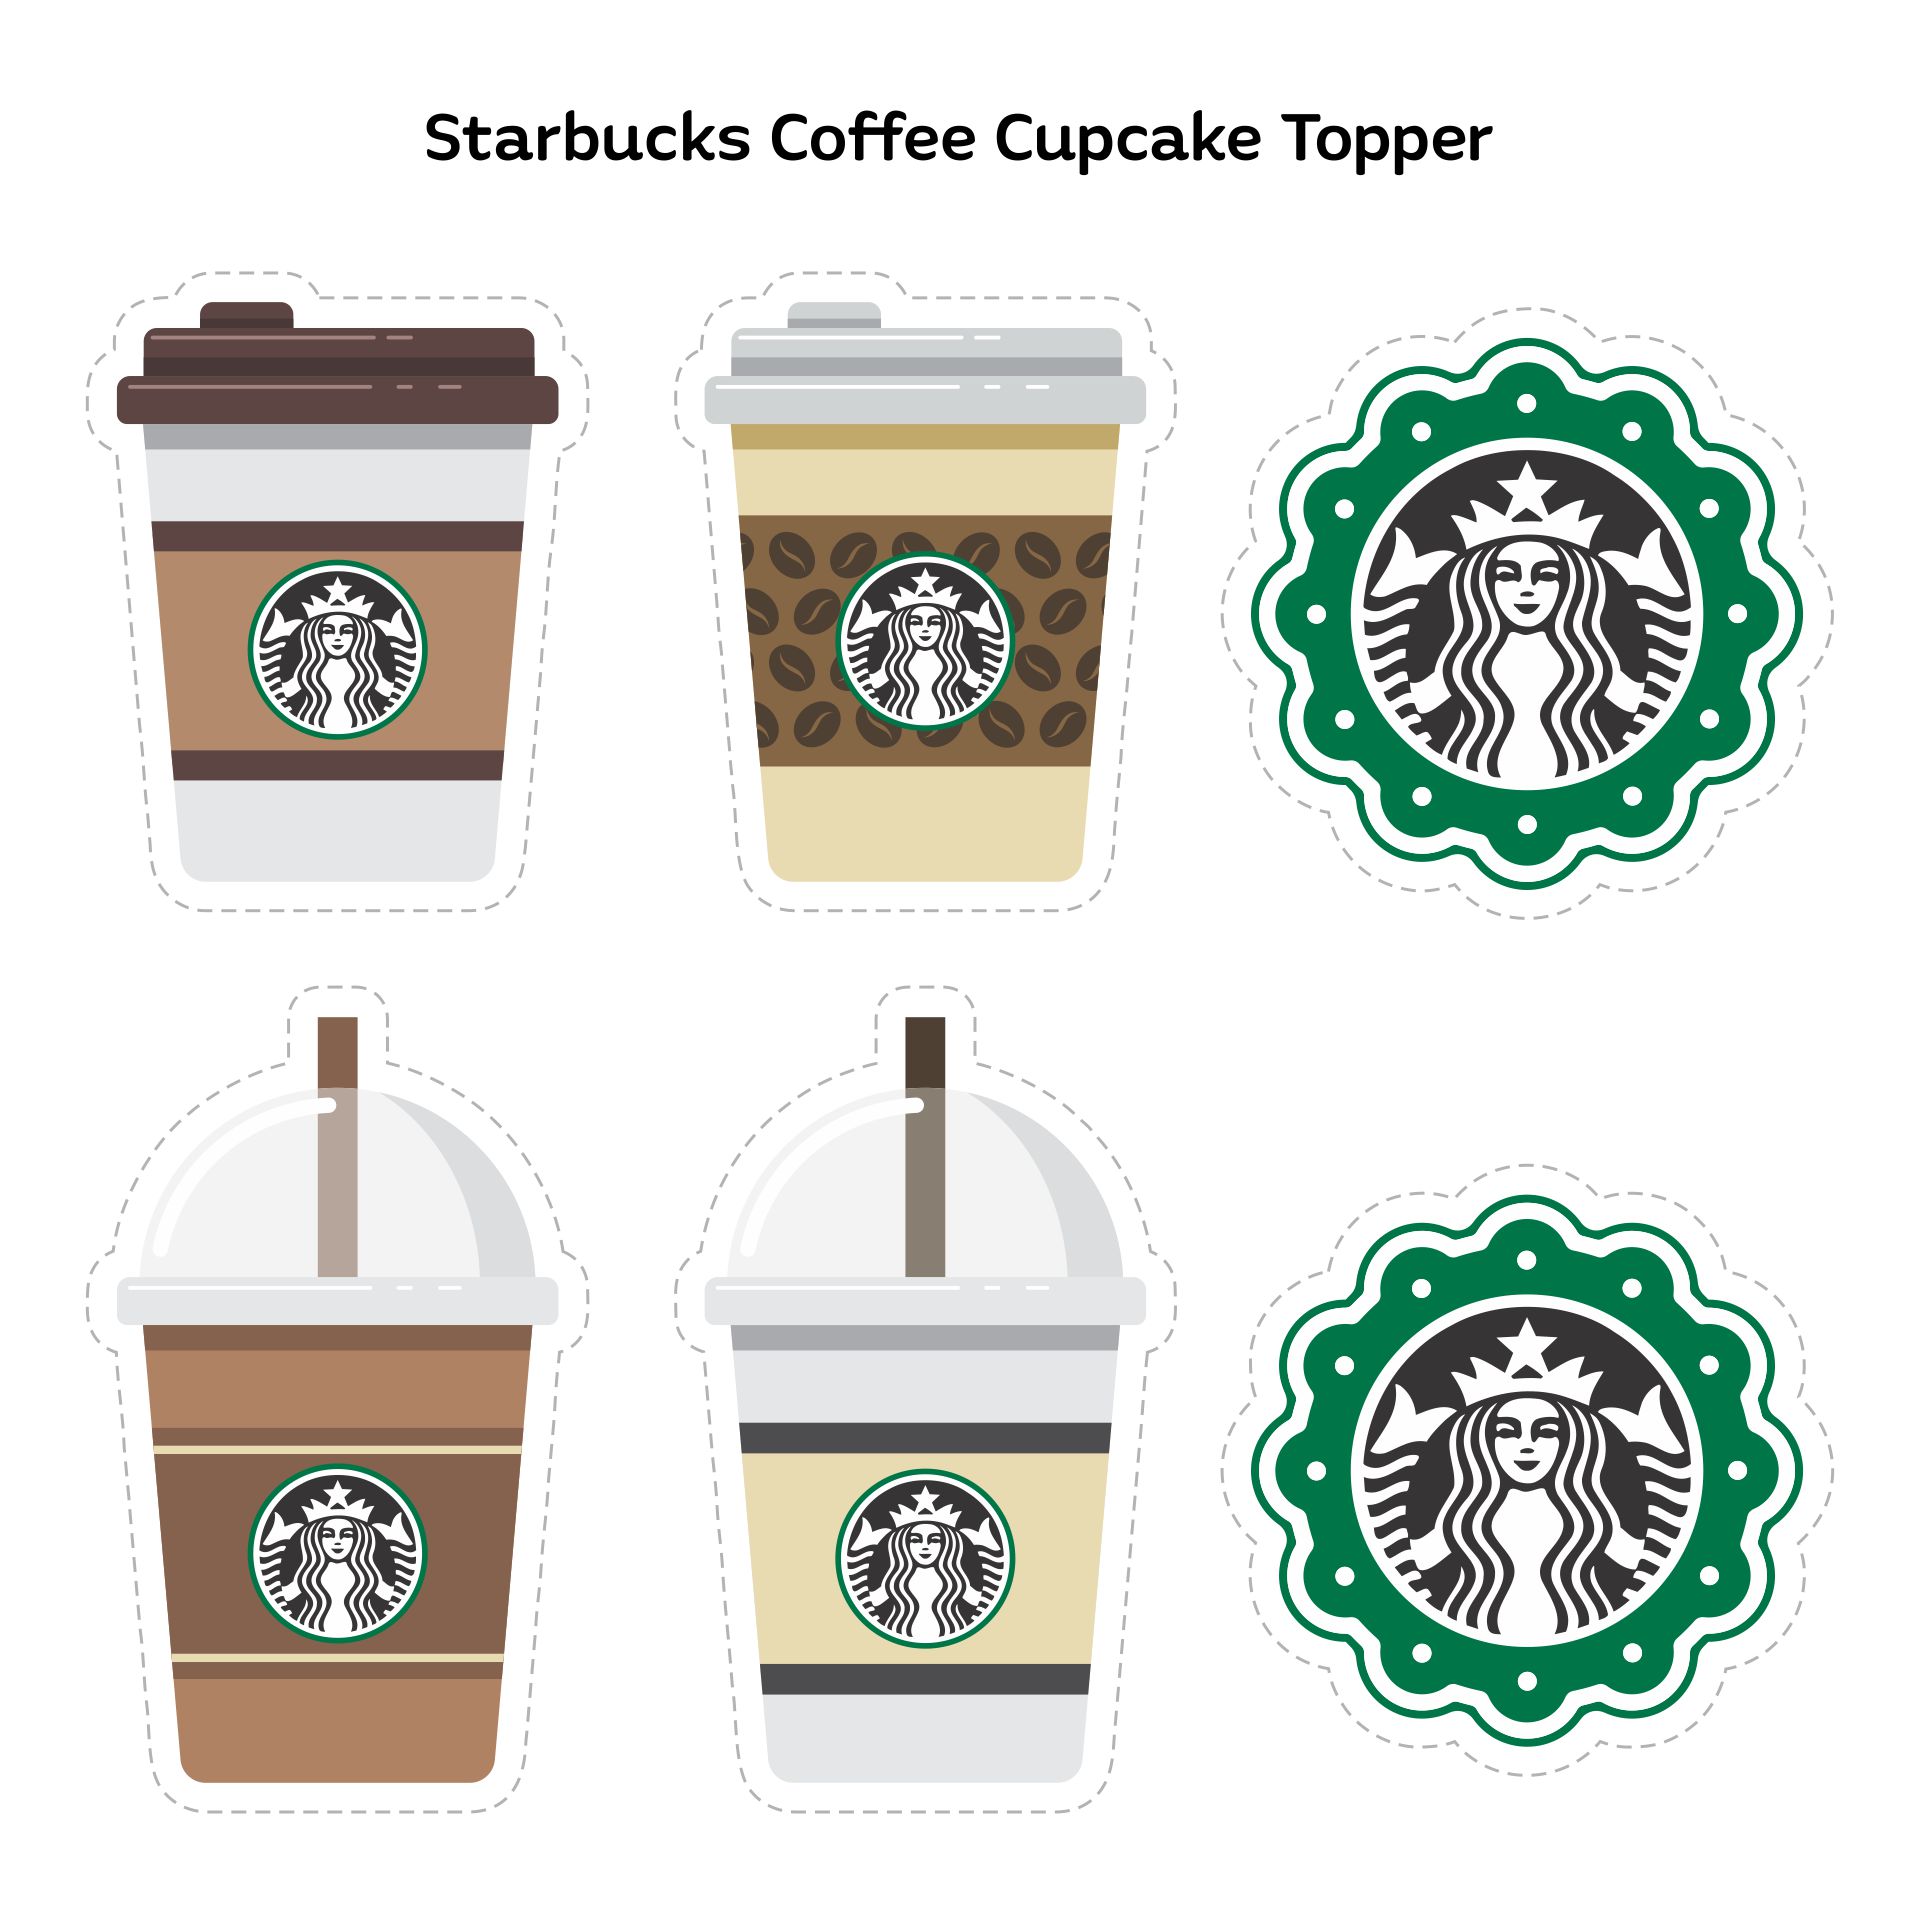 Printable Starbucks Coffee Cupcake Topper